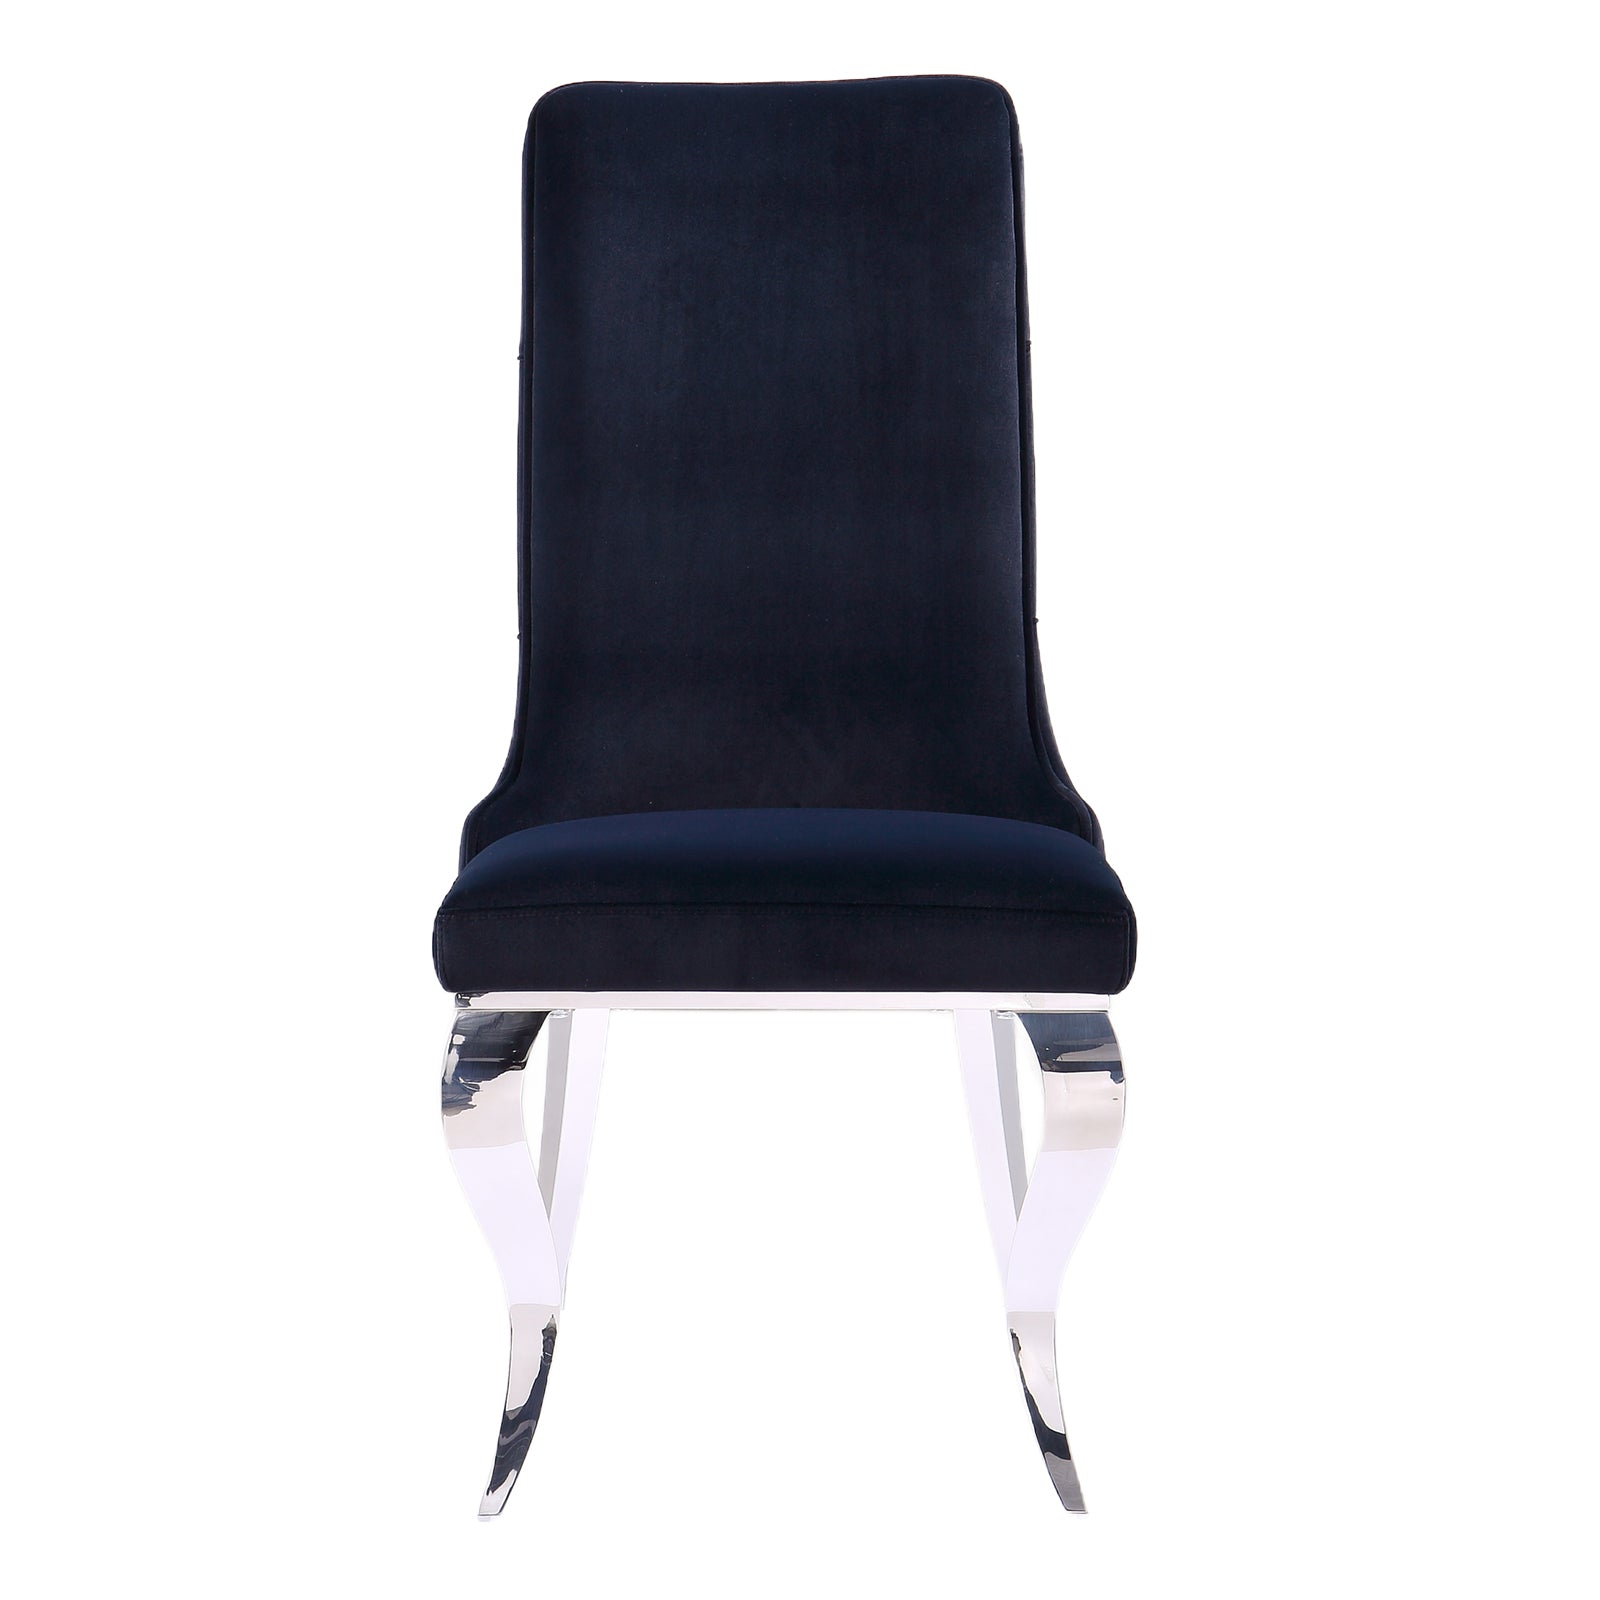 Black velvet Dining Chairs | Button Back | Heavy duty | Silver metal legs | C161